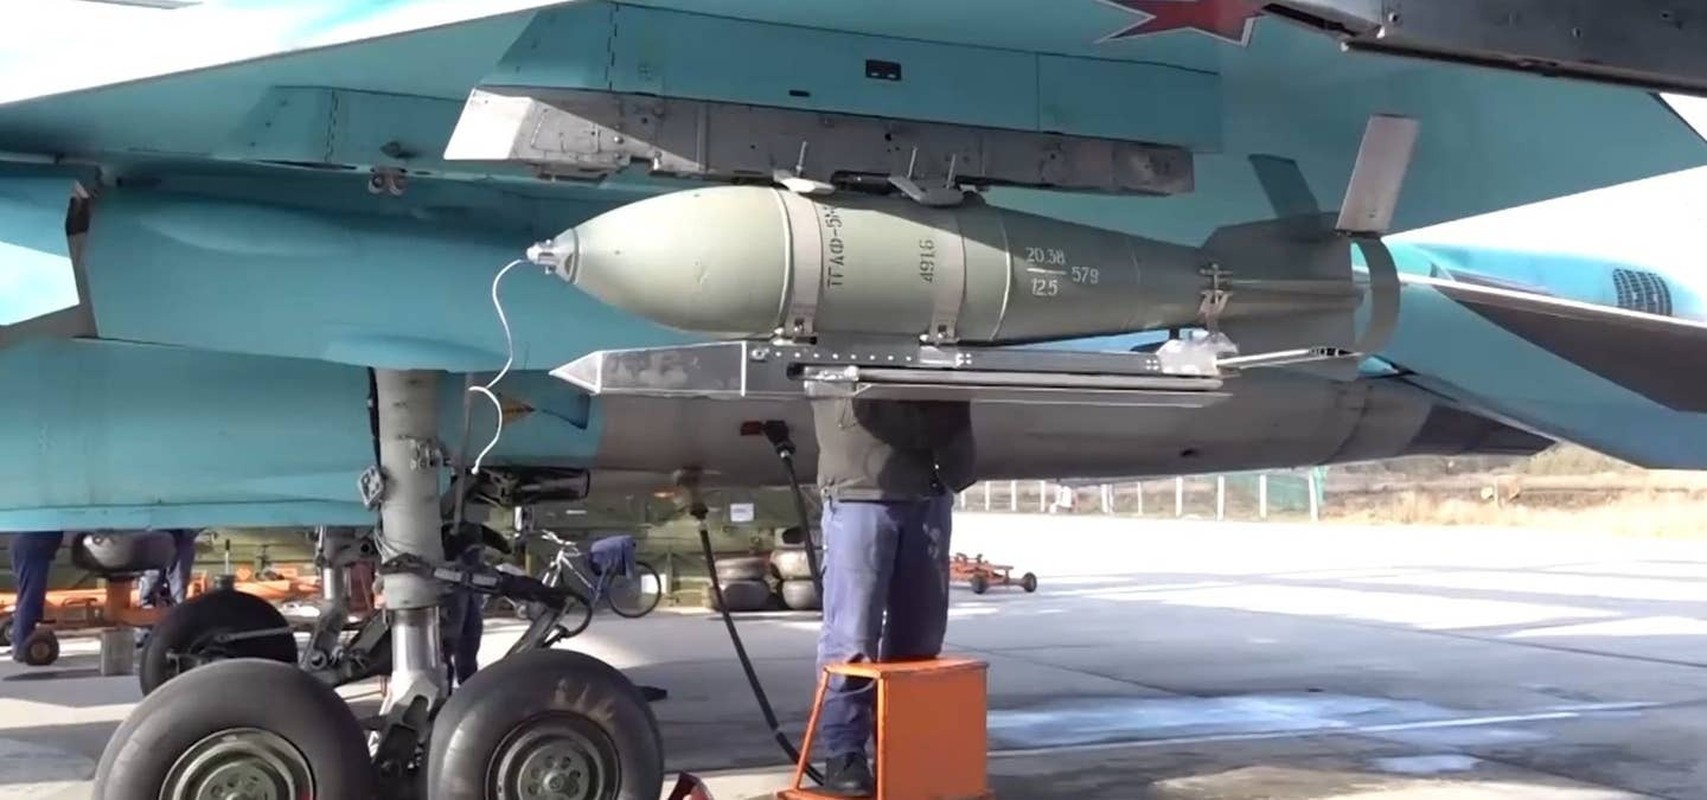 Sieu bom Nga “thoi bay” nhieu xe tang va hang chuc binh si Ukraine-Hinh-3